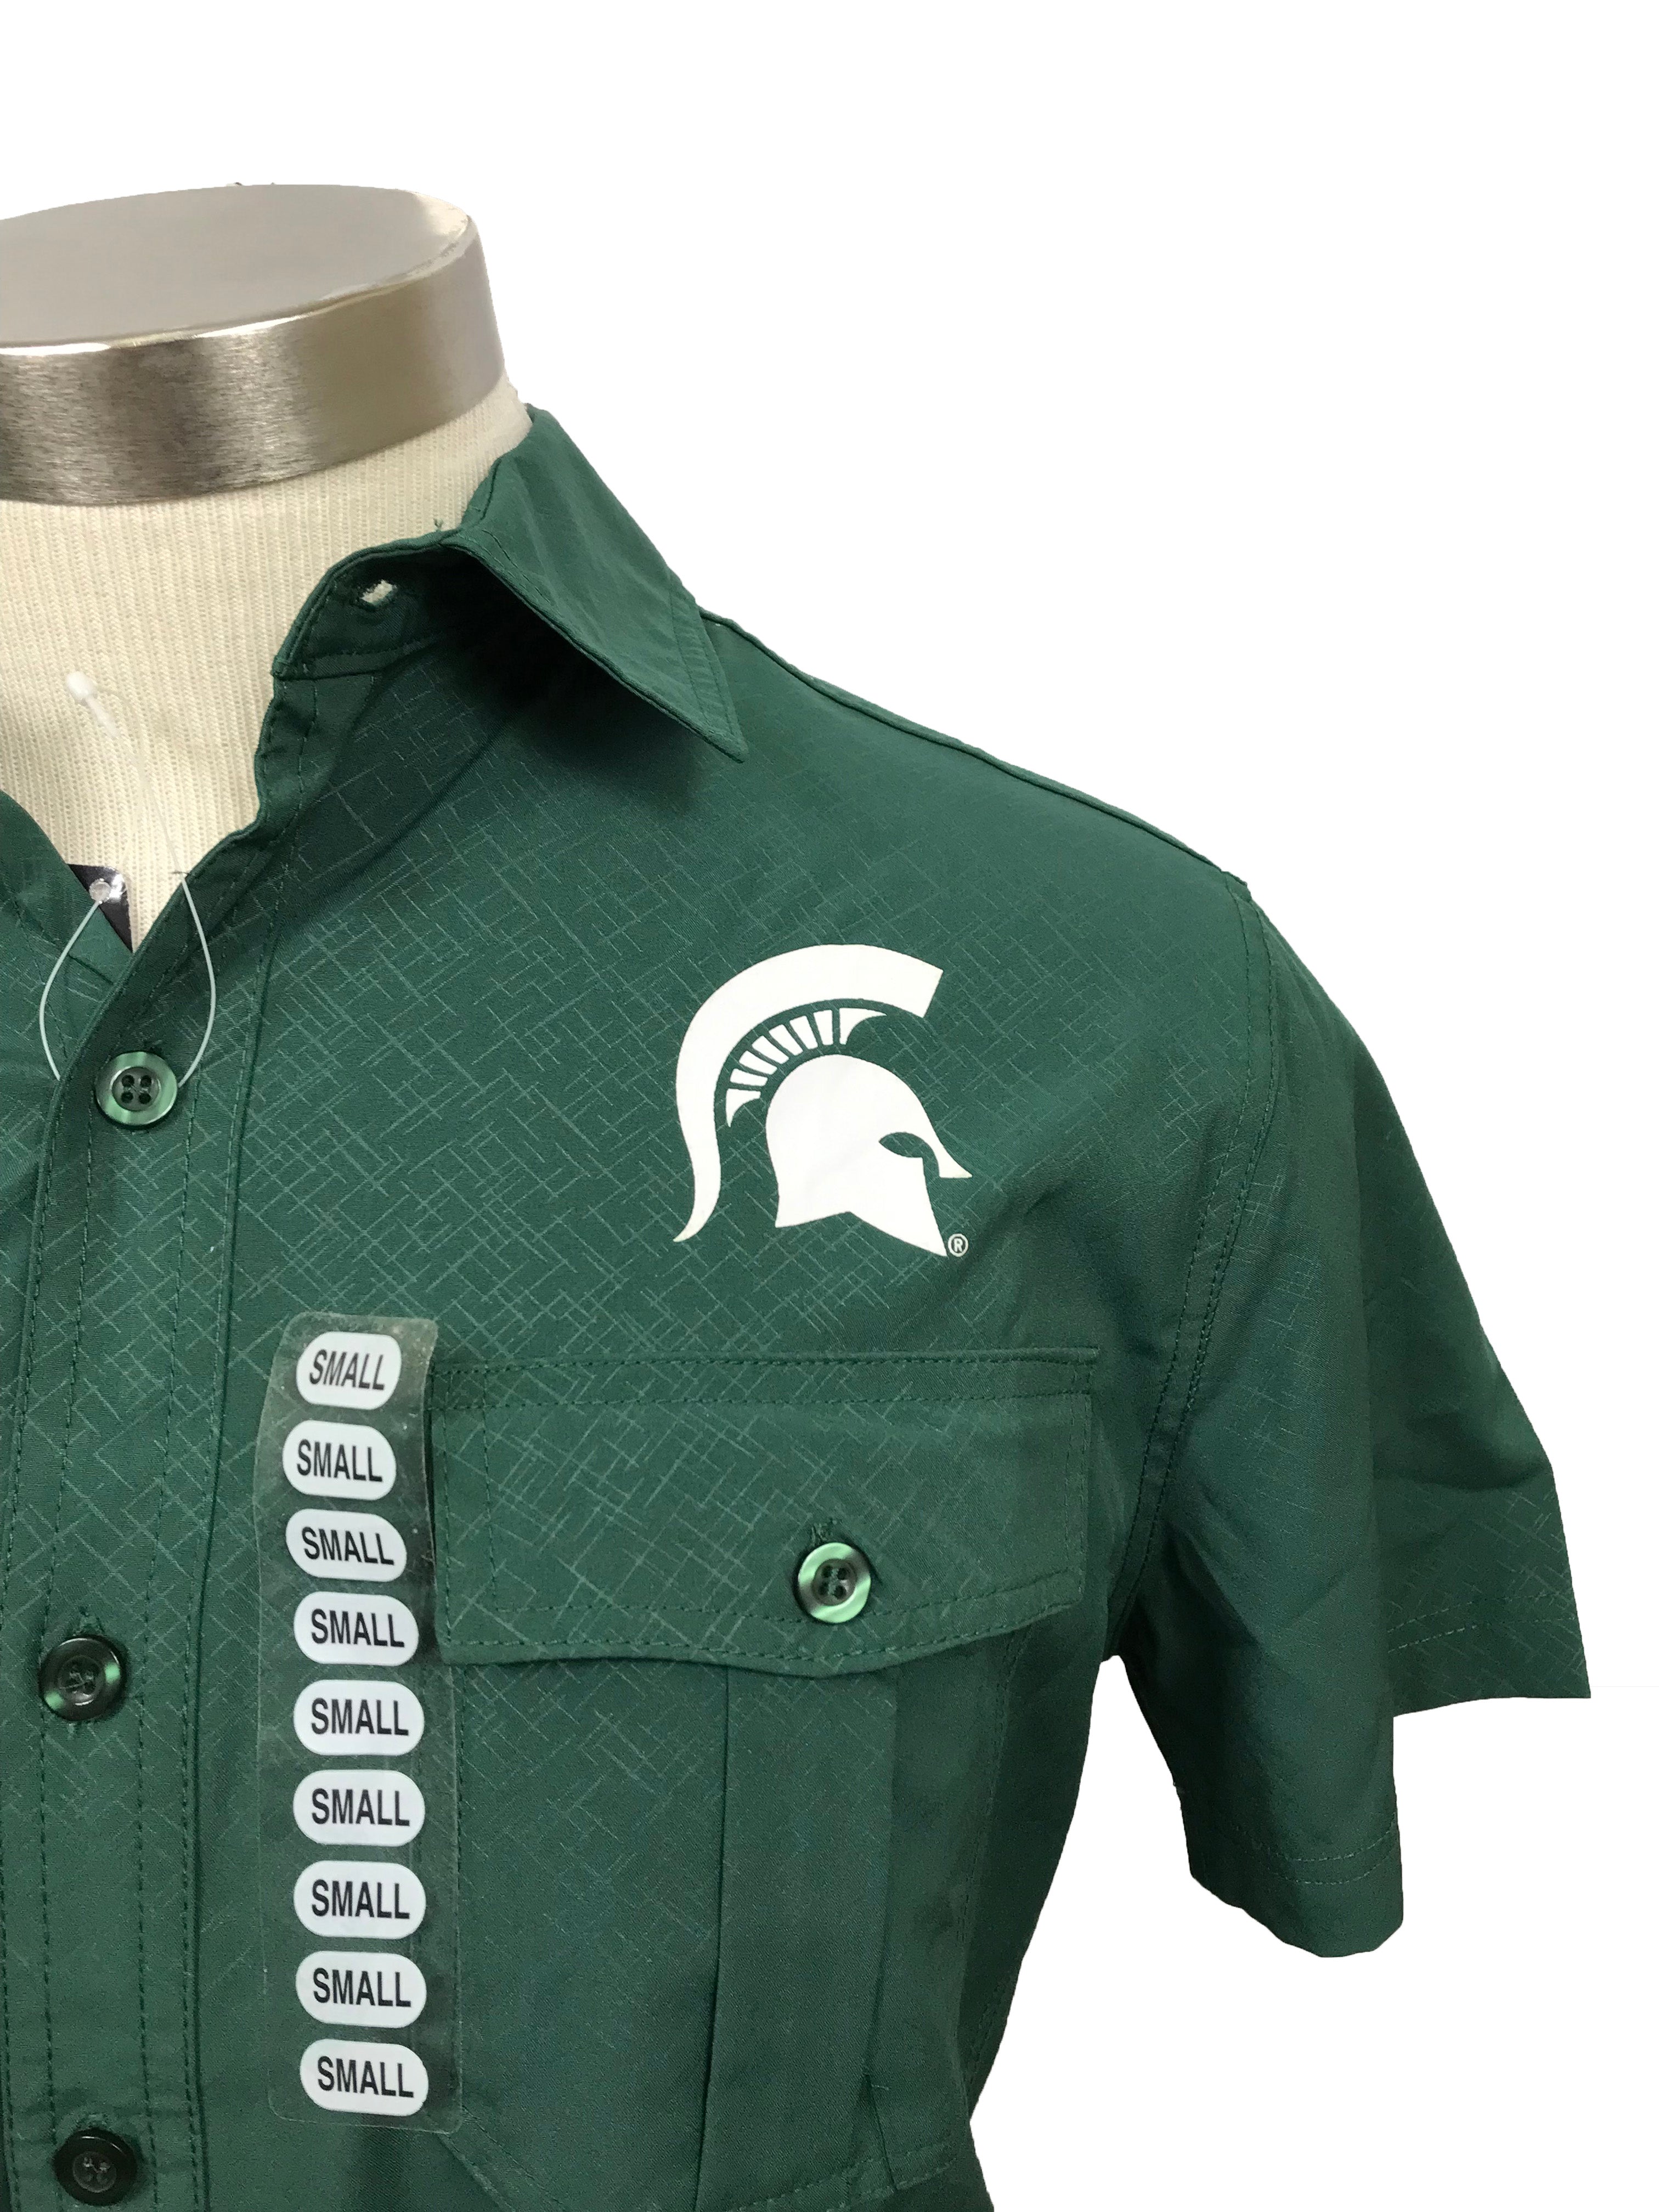 MSU Green Short-Sleeve Button-Down Shirt Men's Size Small